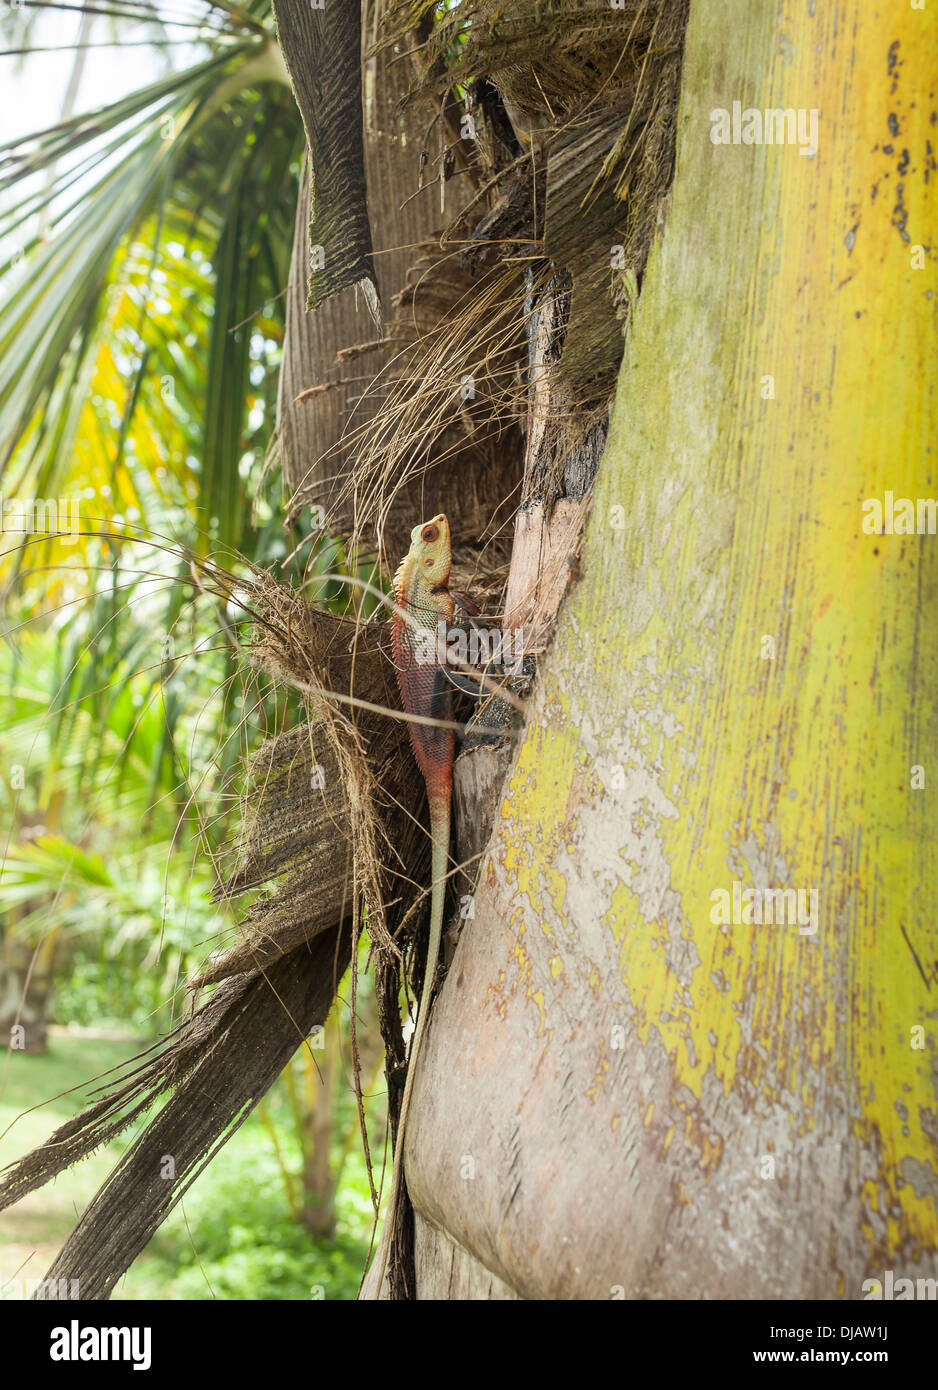 The Oriental garden lizzard, climbing up a tree in Sri Lanka Stock Photo